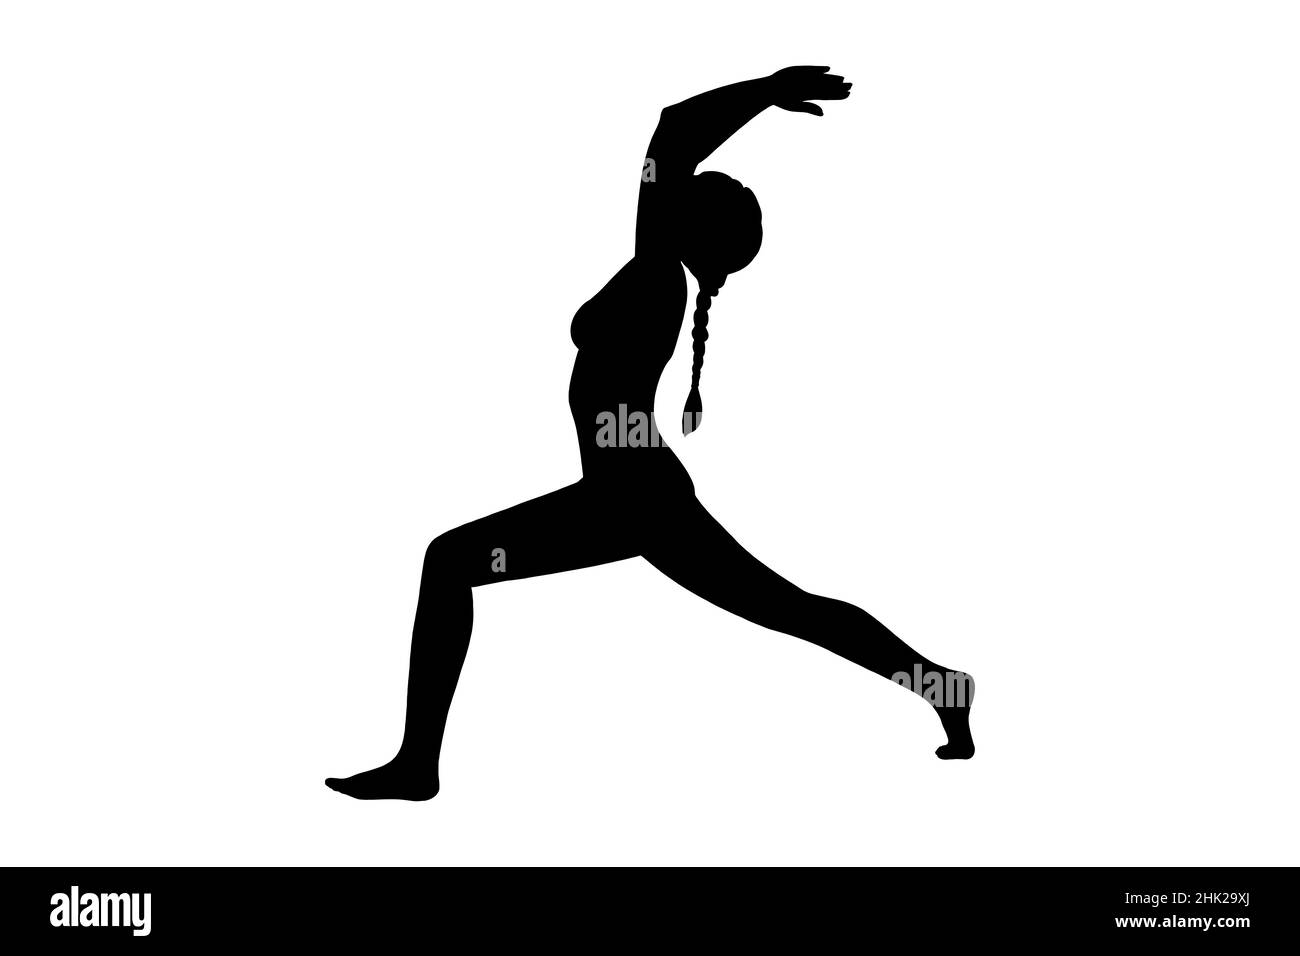 Yoga warrior pose or virabhadrasana. Woman silhouette practicing yoga pose. Vector illustration isolated on white background Stock Vector